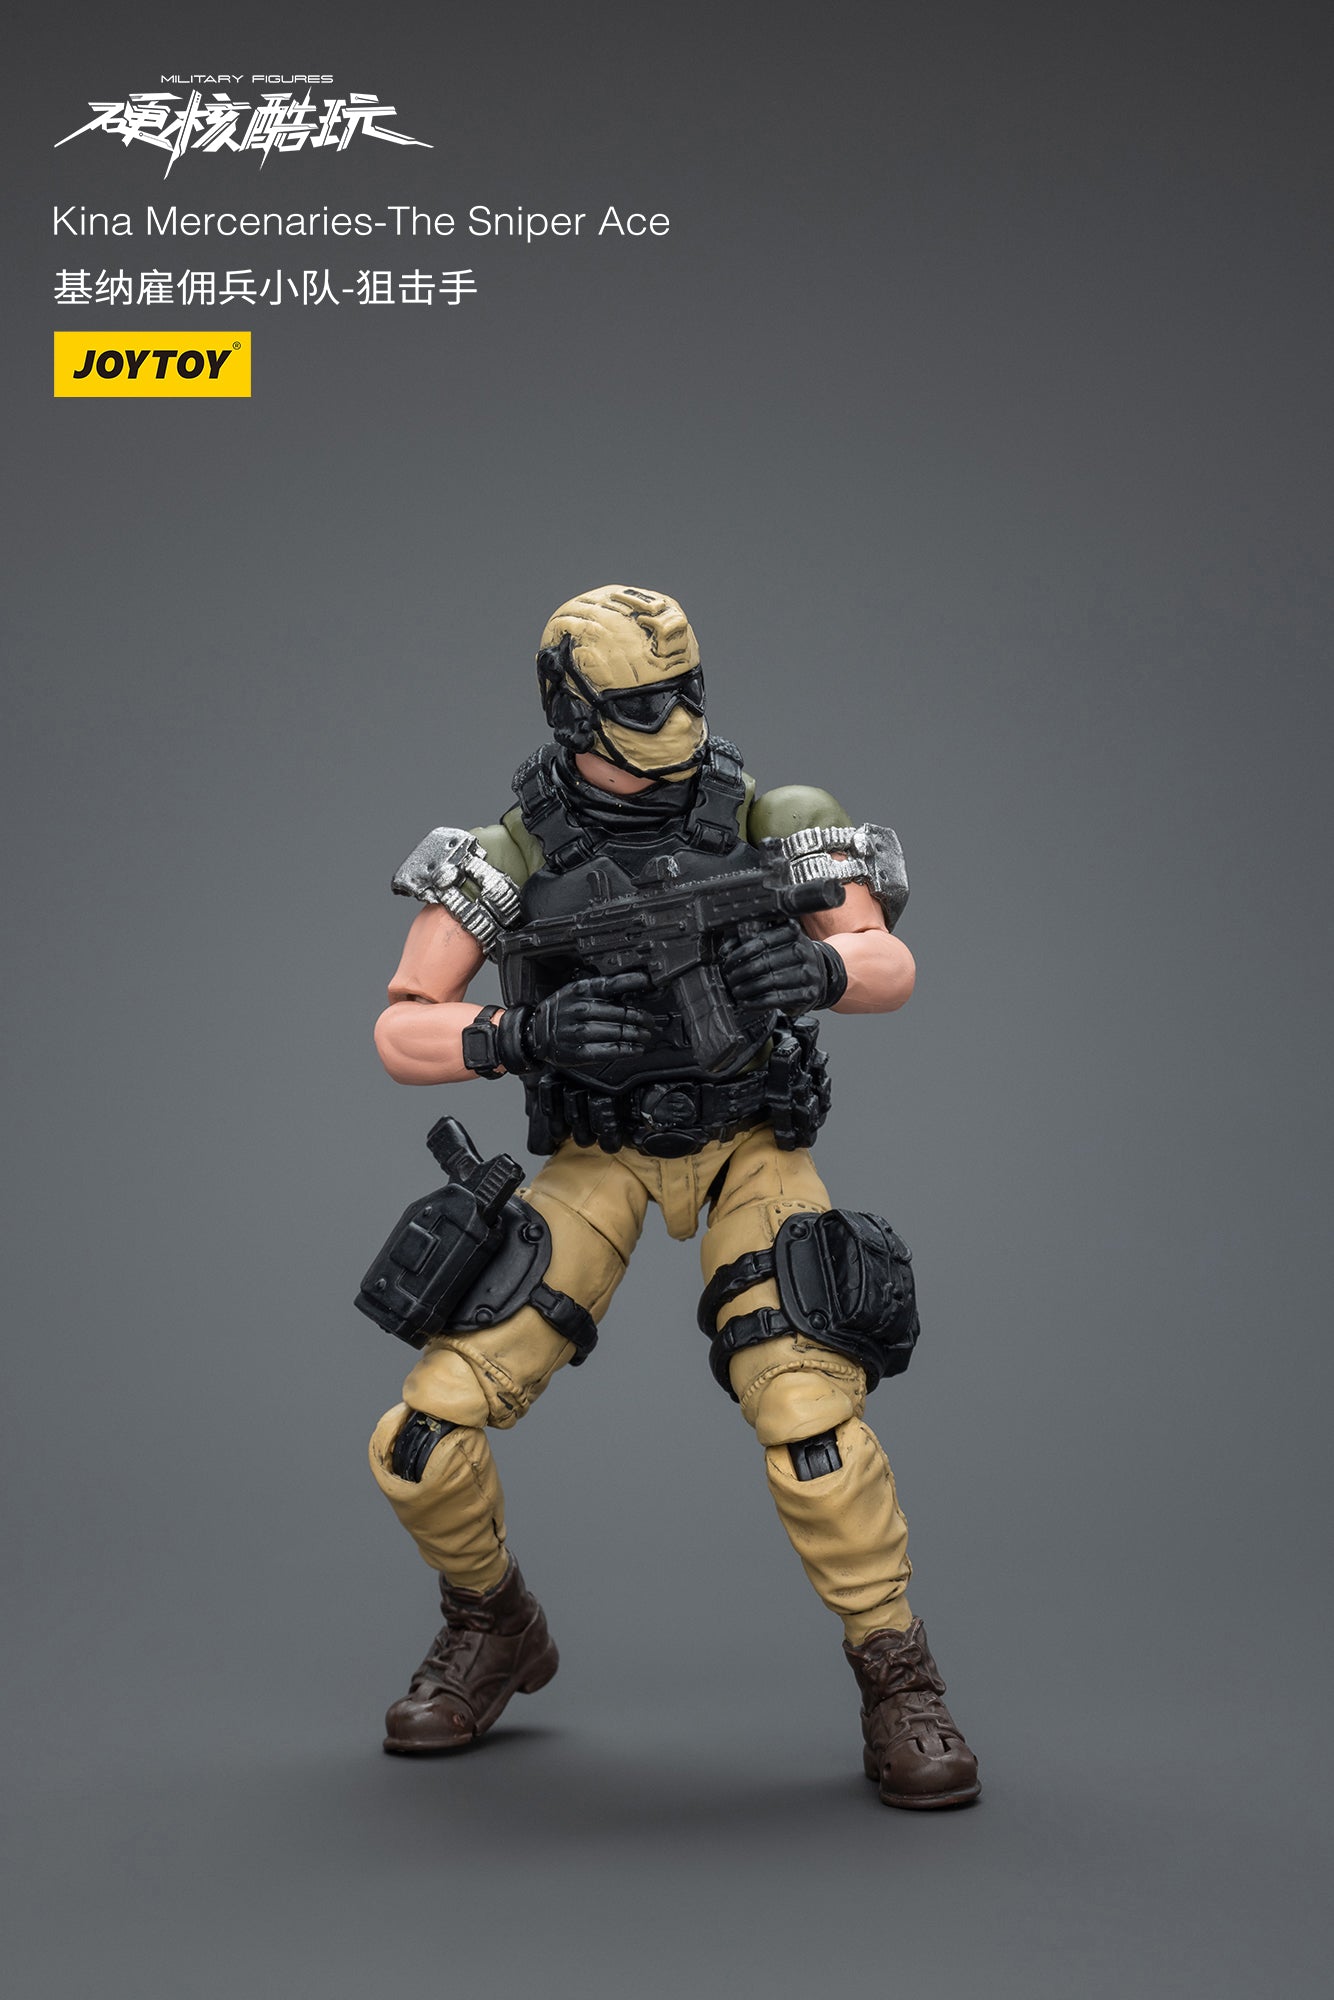 Kina Mercenaries-The Sniper Ace - Military Action Figure By JOYTOY